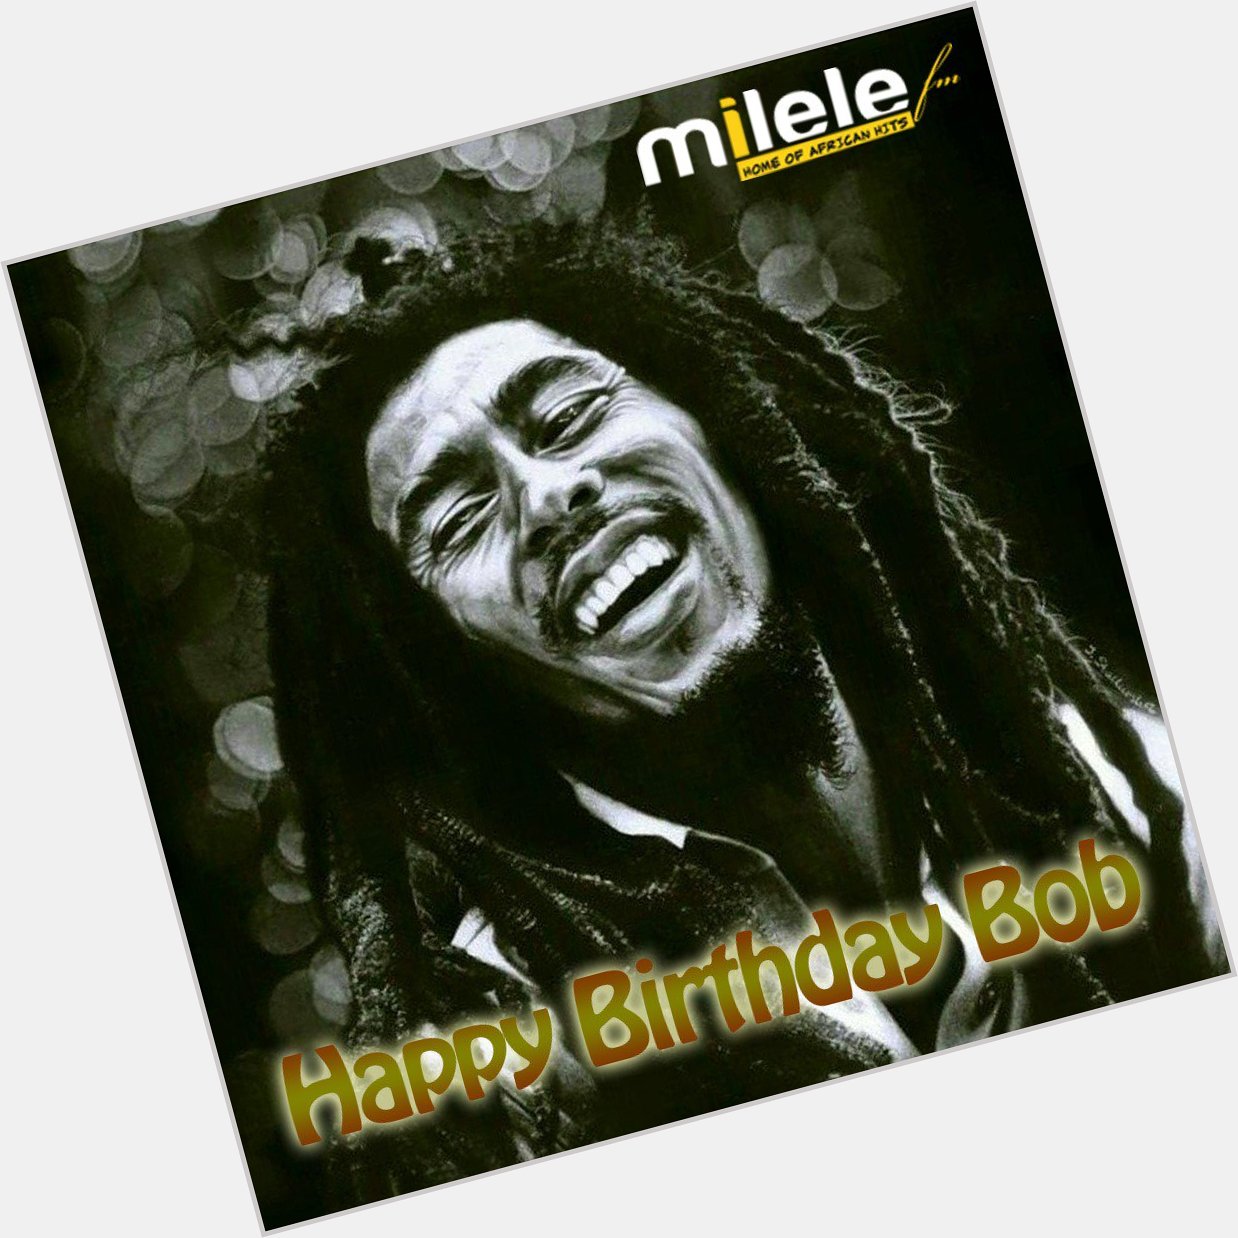  on Happy Birthday Bob Marley 